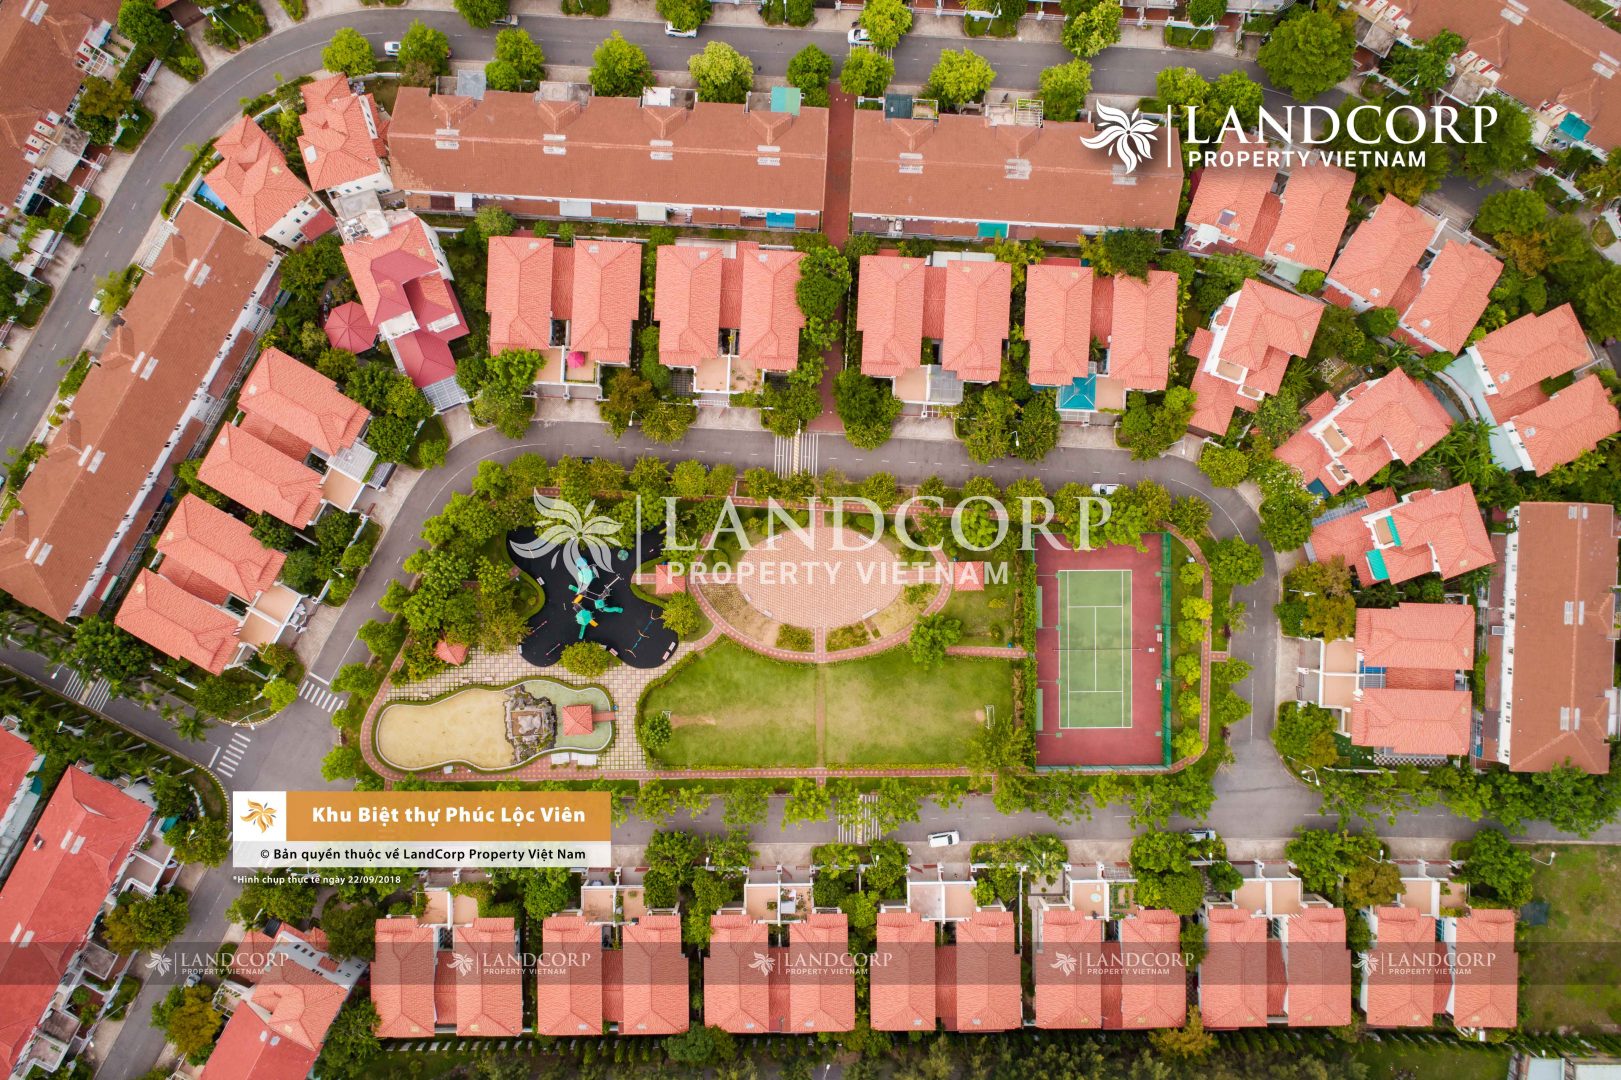 https://landcorp.com.vn/wp-content/uploads/2019/04/10Phuc-Loc-Vien-by-LandCorp-1.jpg